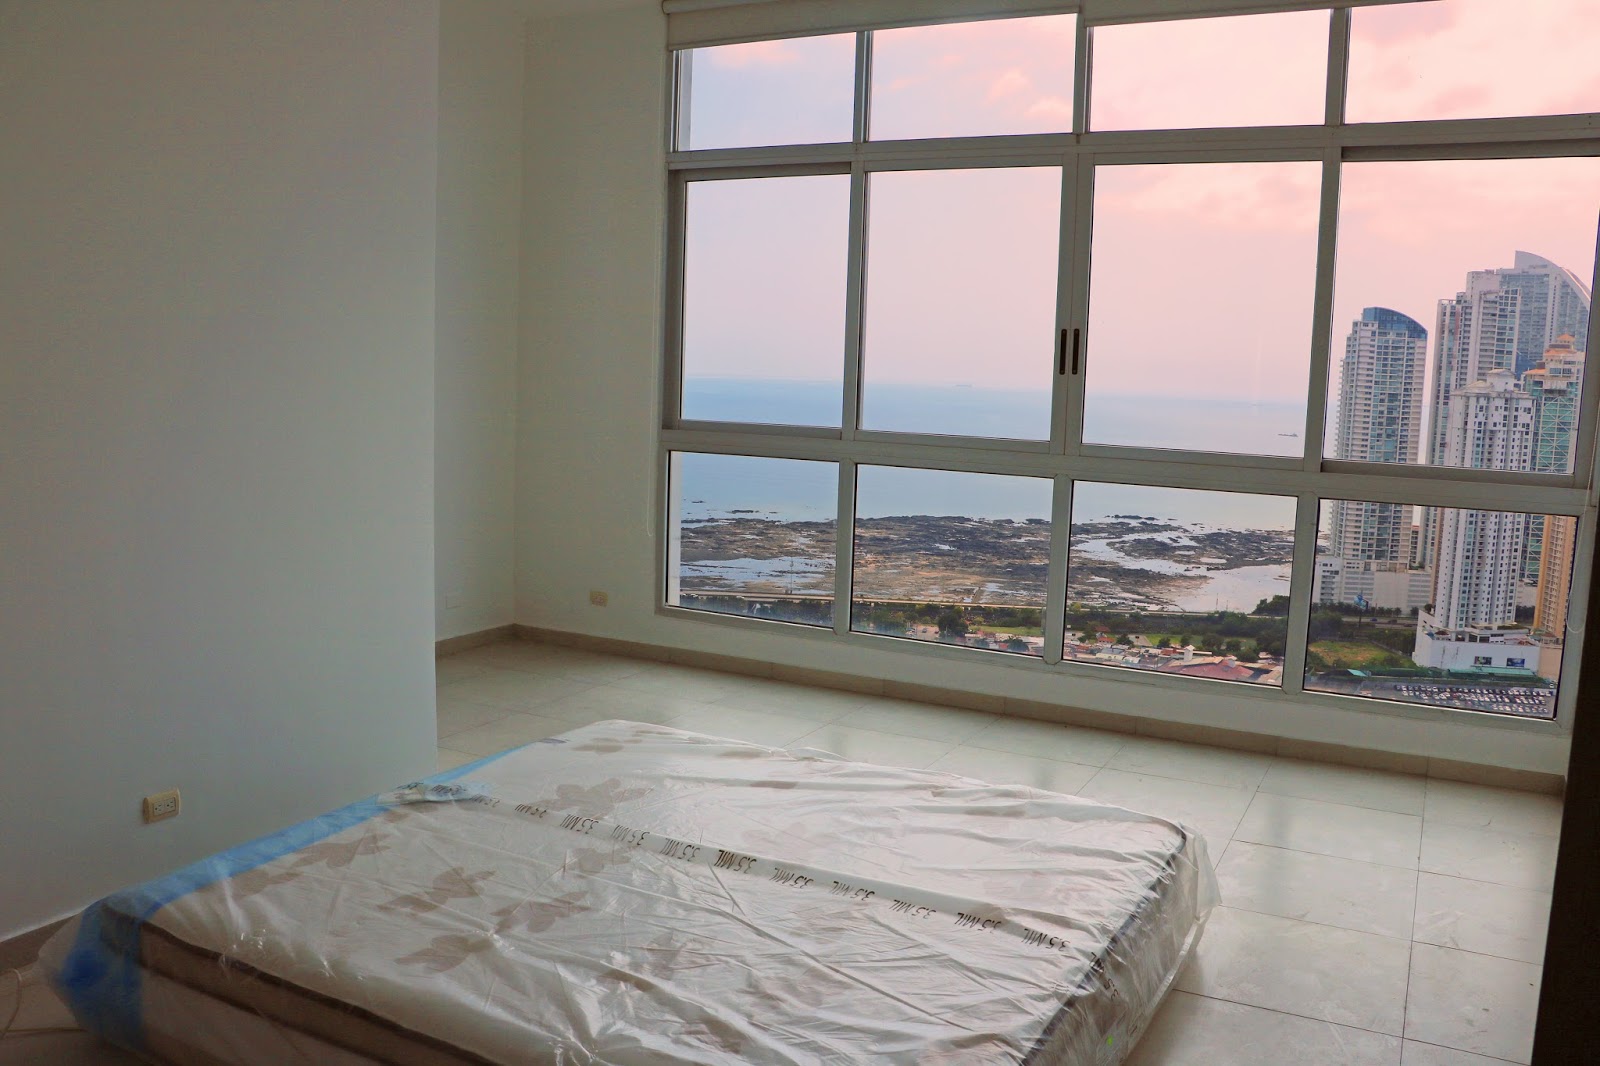 Apartment with a beautiful view of Panama City, Panama